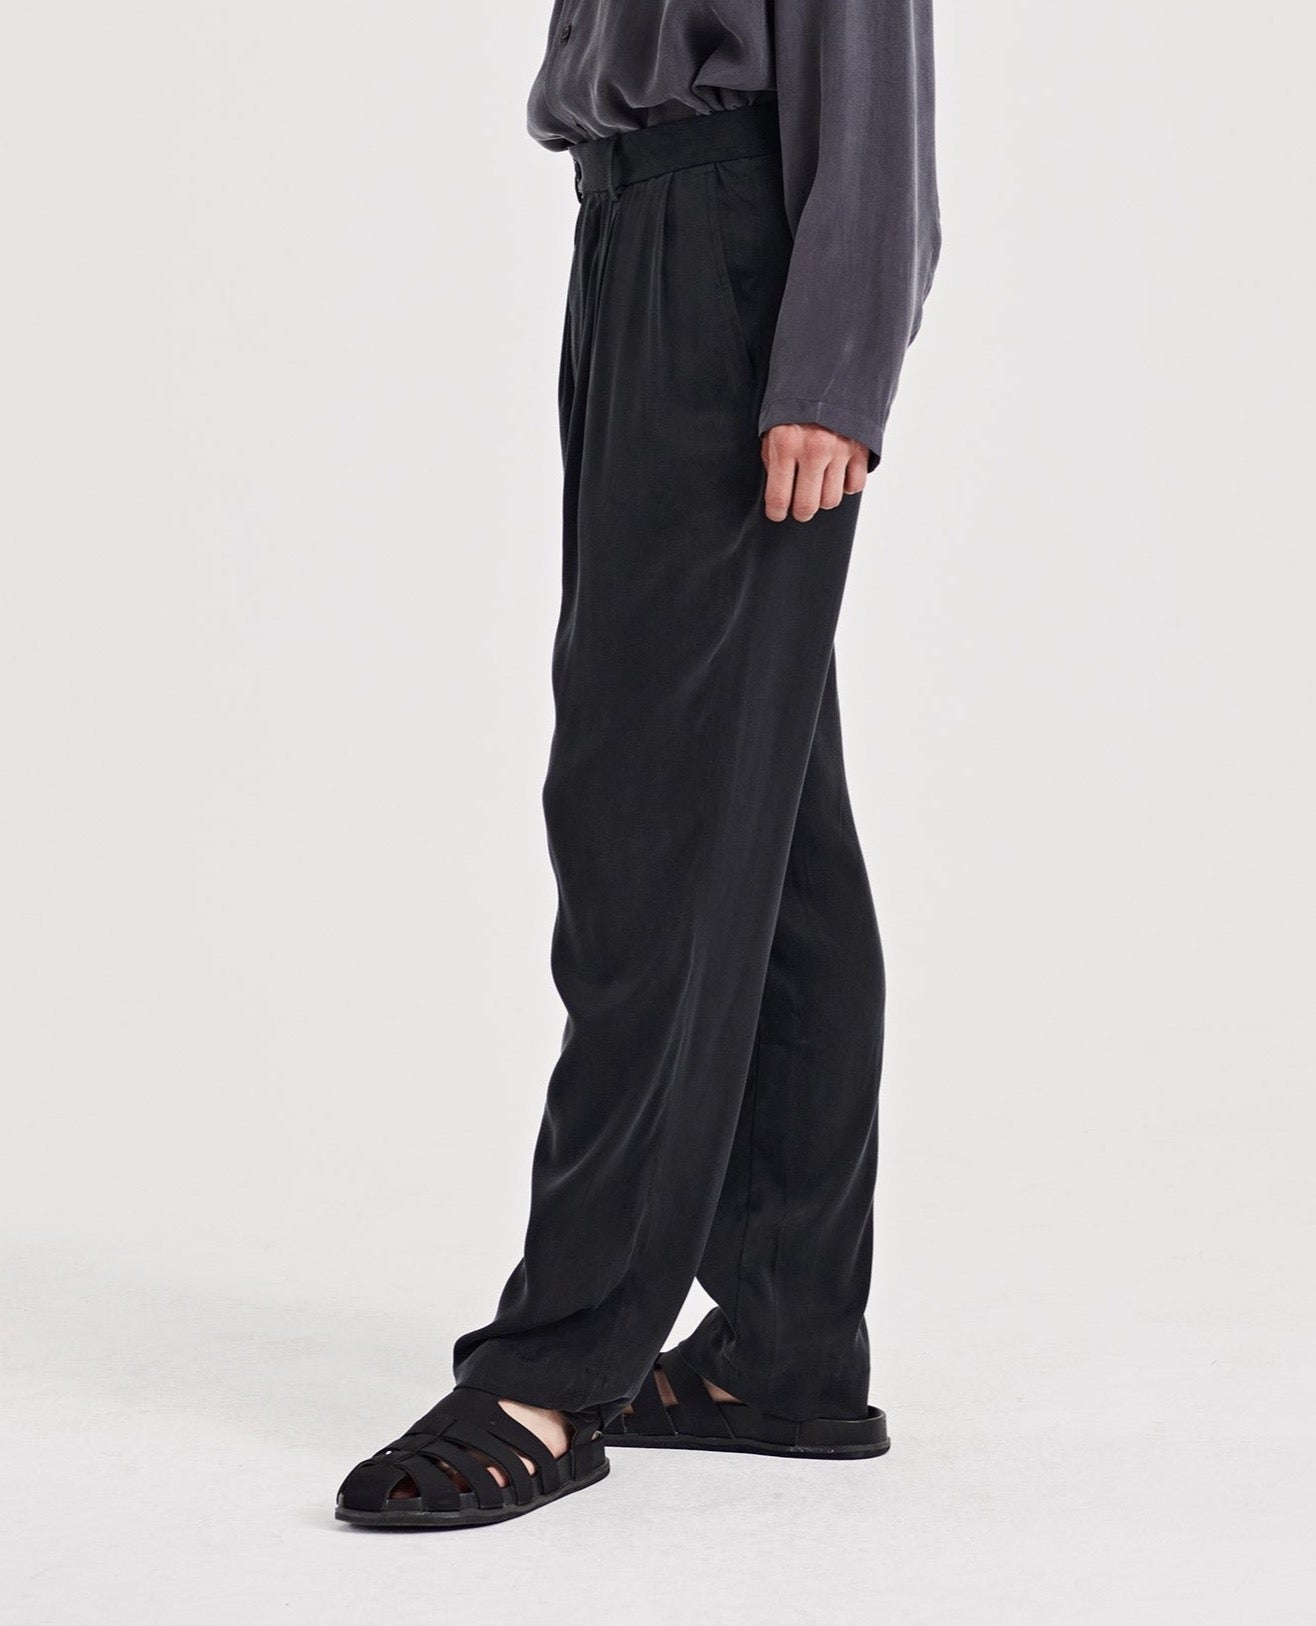 08 / Pleated Vegan silk trousers black